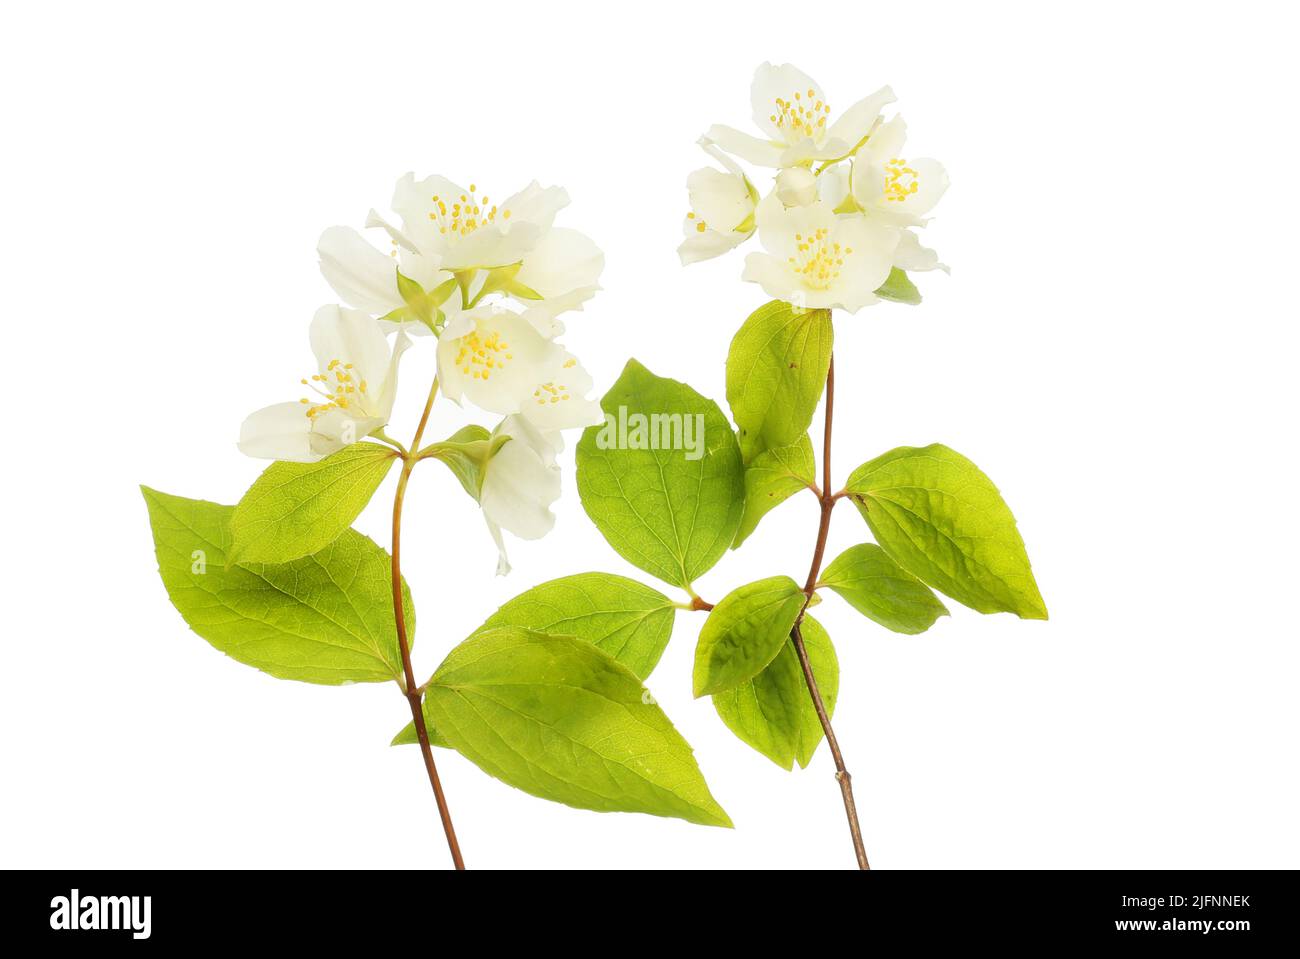 Philadelphus flowers and foliage isolated against white Stock Photo